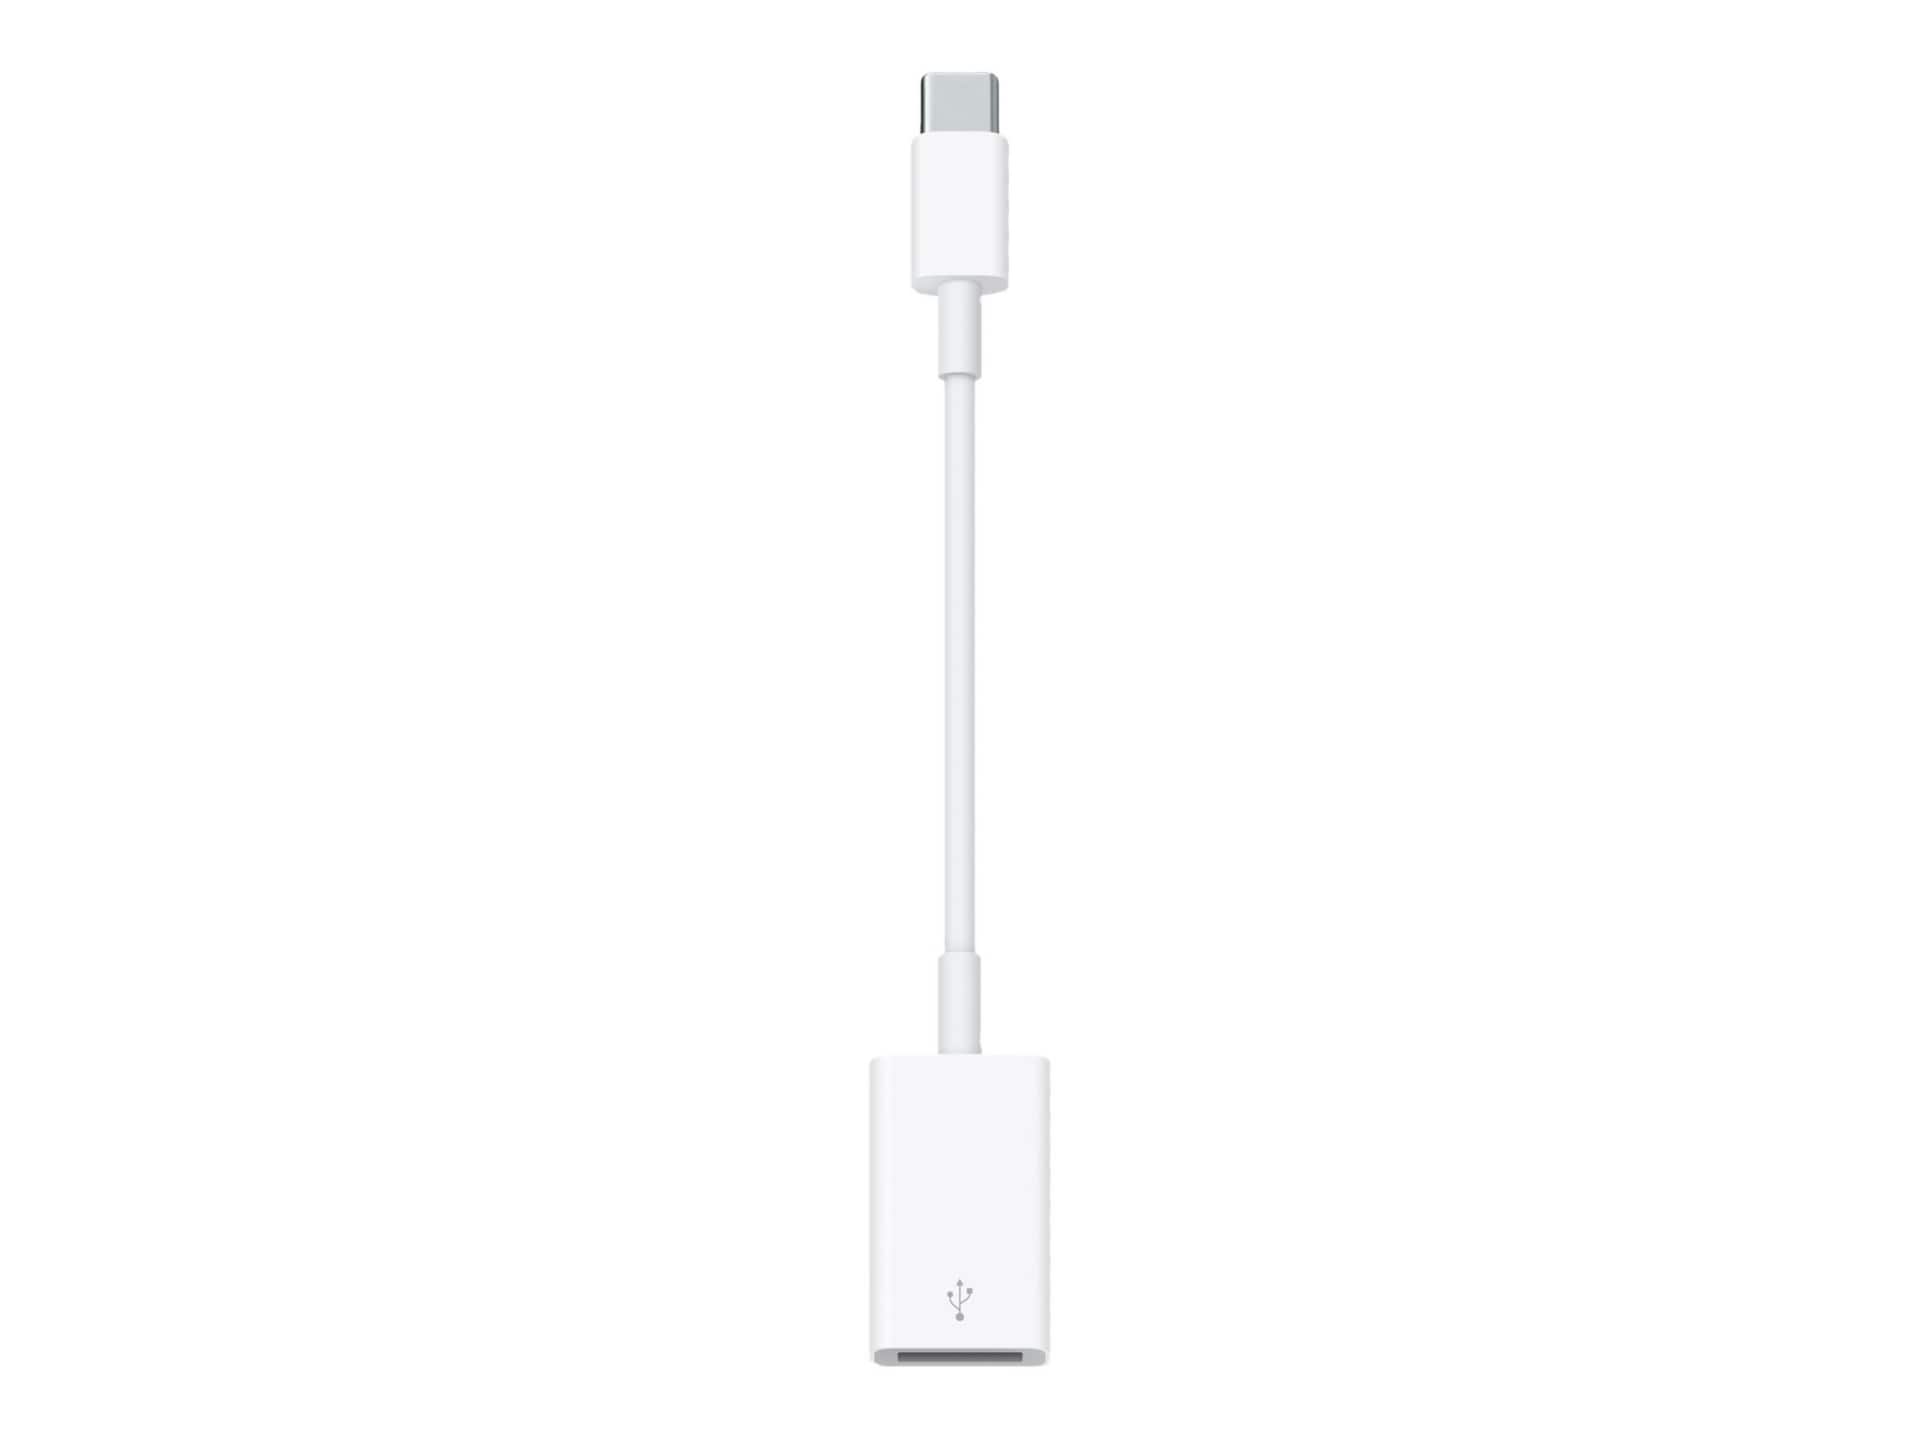 Apple to Adapter - USB-C adapter - USB Type A 24 pin USB-C - MJ1M2AM/A - USB Adapters - CDW.com